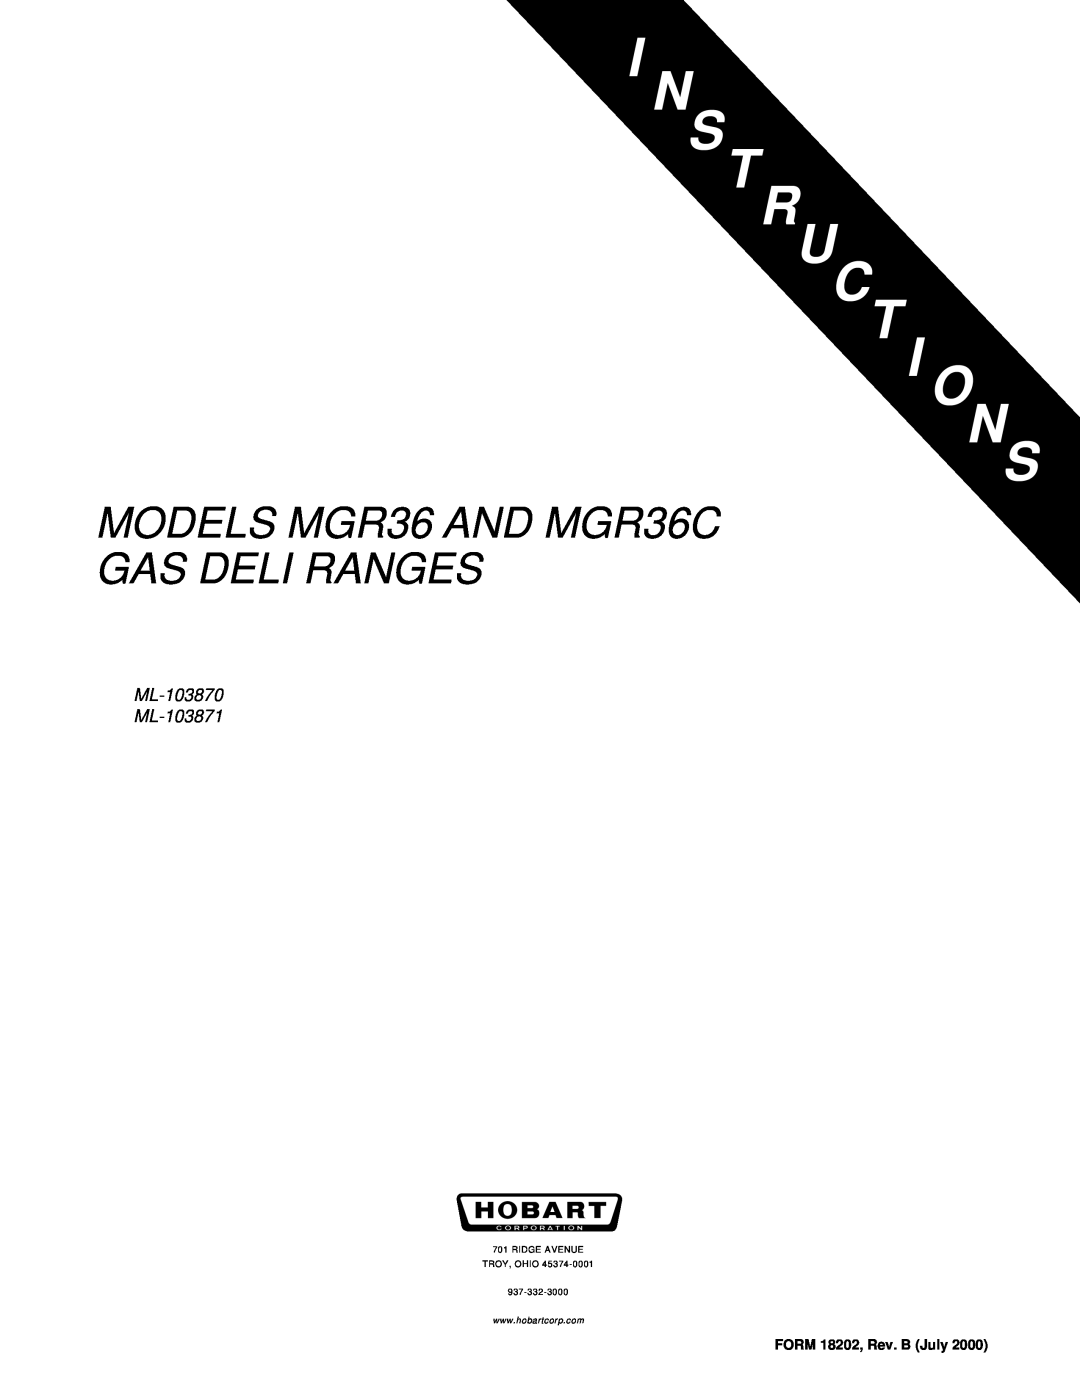 Hobart MGR36C manual N S Truct I Ons, MODELS MGR36 AND GAS DELI RANGES, ML-103870 ML-103871, FORM 18202, Rev. B July 